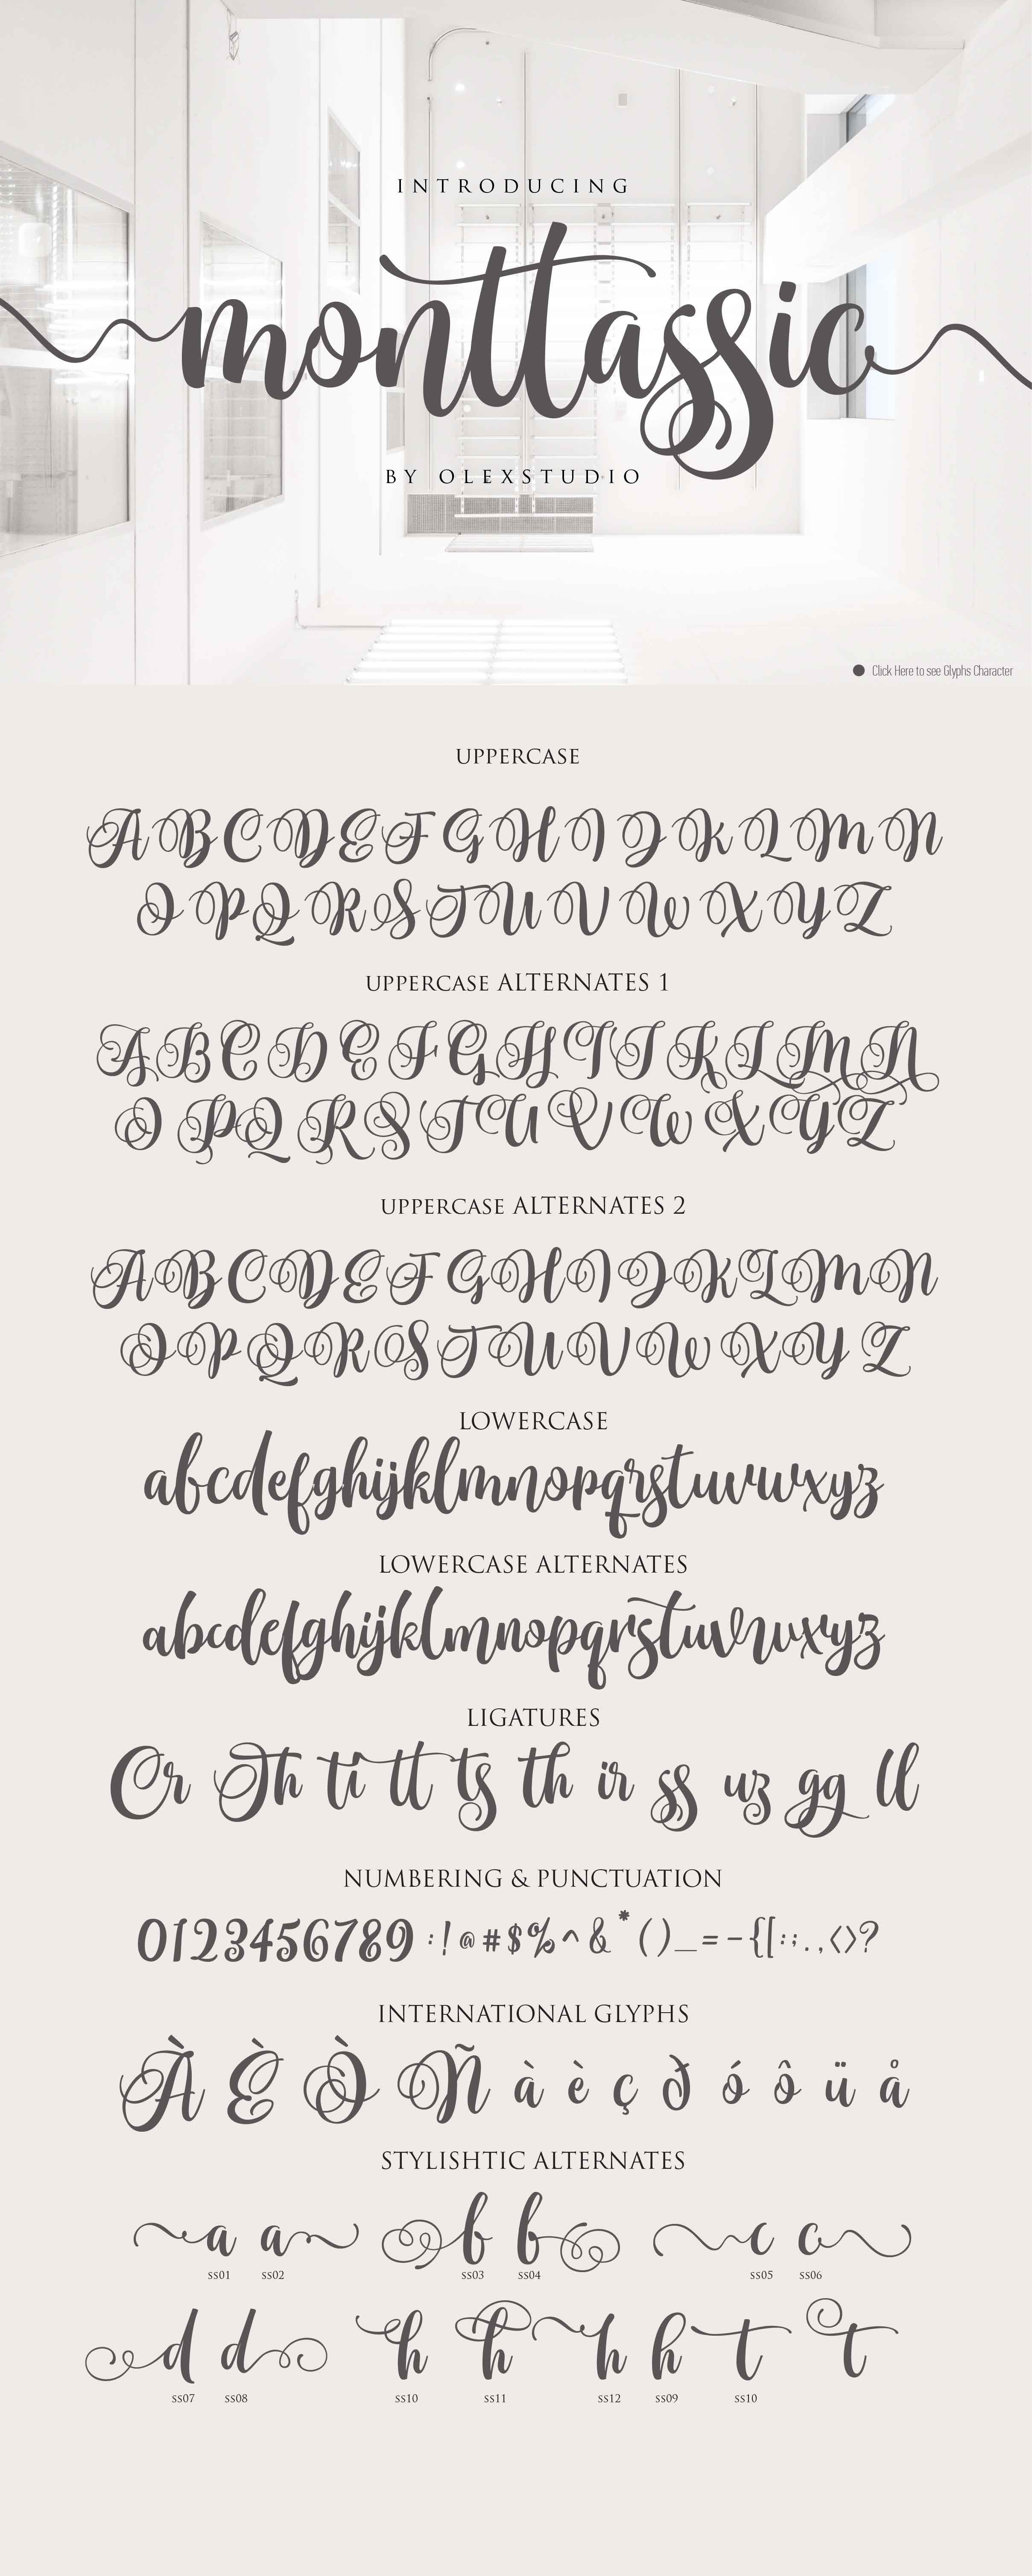 Monttassic - Luxury Script Font cover image.